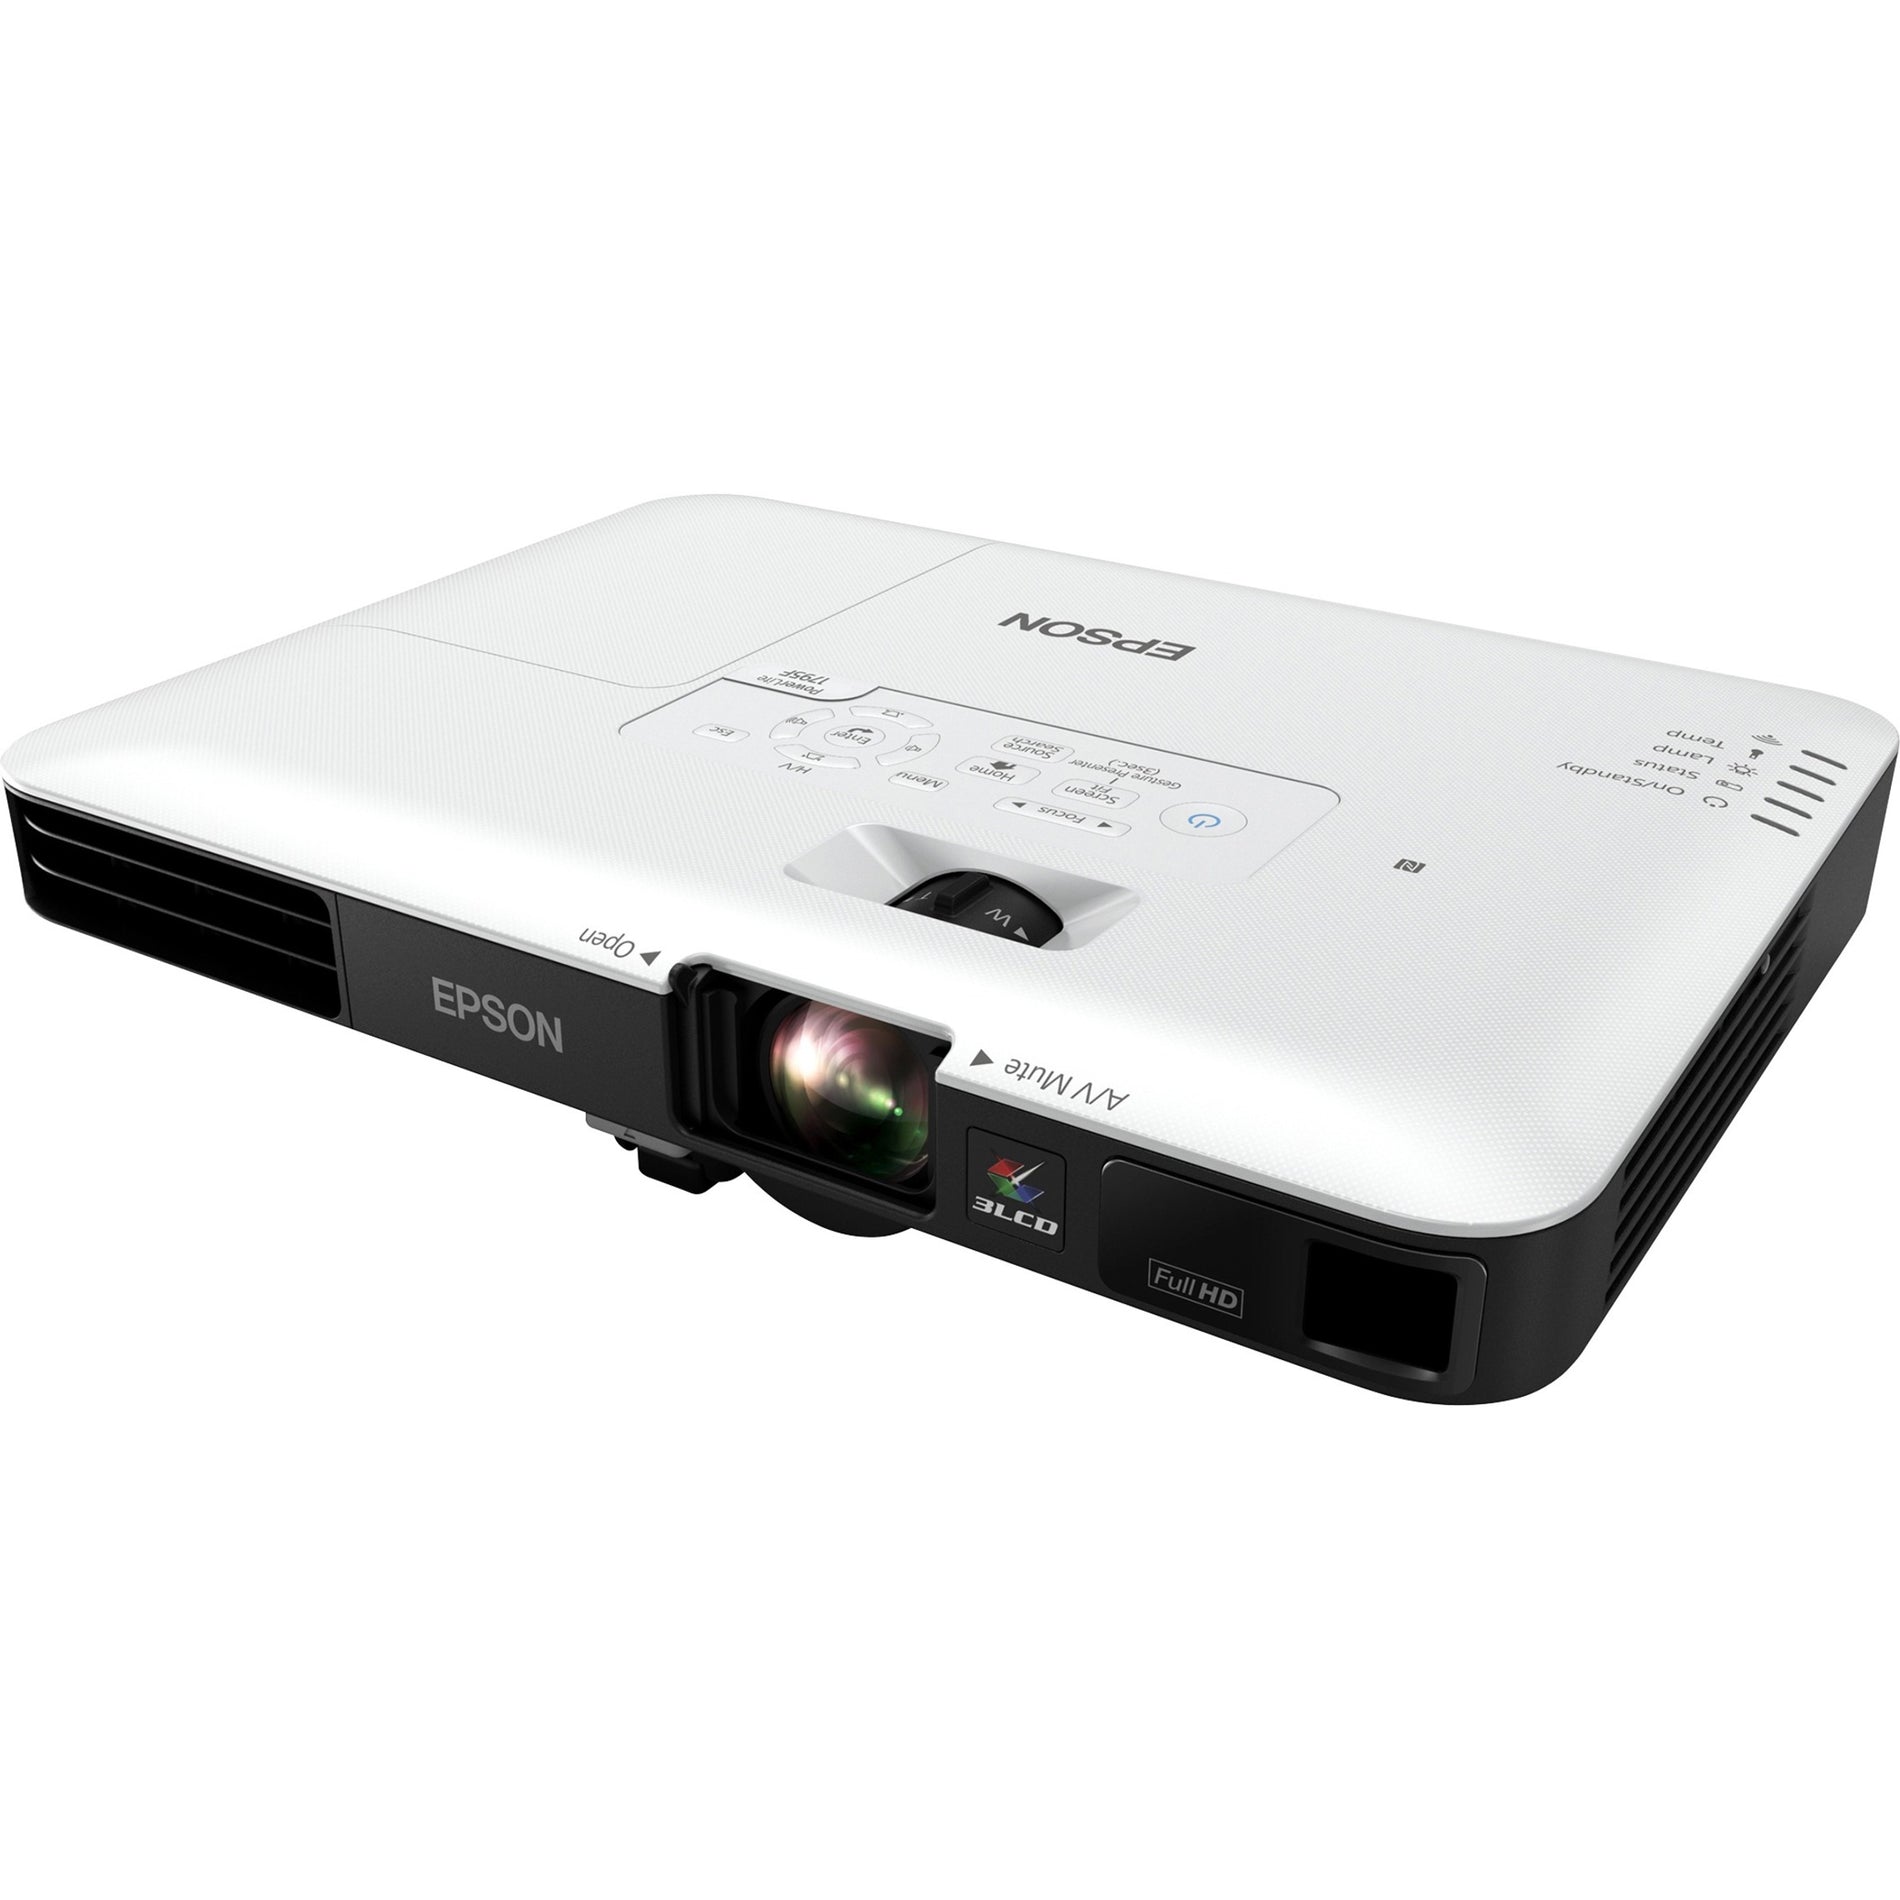 Epson V11H796020 PowerLite 1795F Wireless Full HD 1080p 3LCD Projector, 3200 Lumens, 16:9 Aspect Ratio